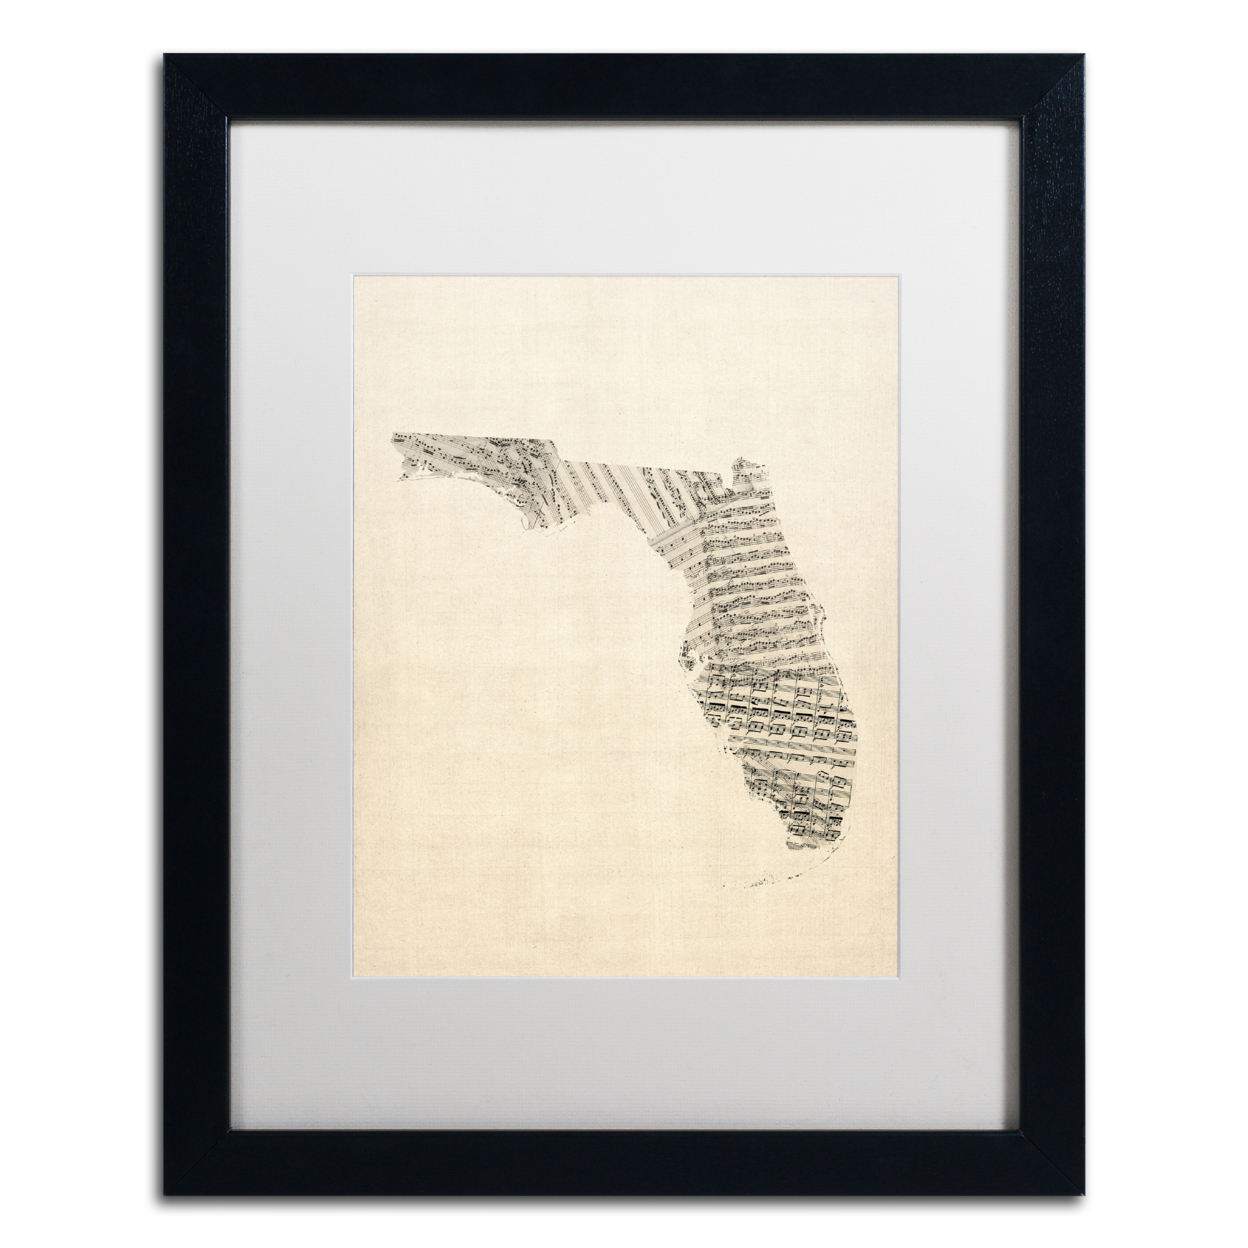 Michael Tompsett 'Old Sheet Music Map Of Florida' Black Wooden Framed Art 18 X 22 Inches